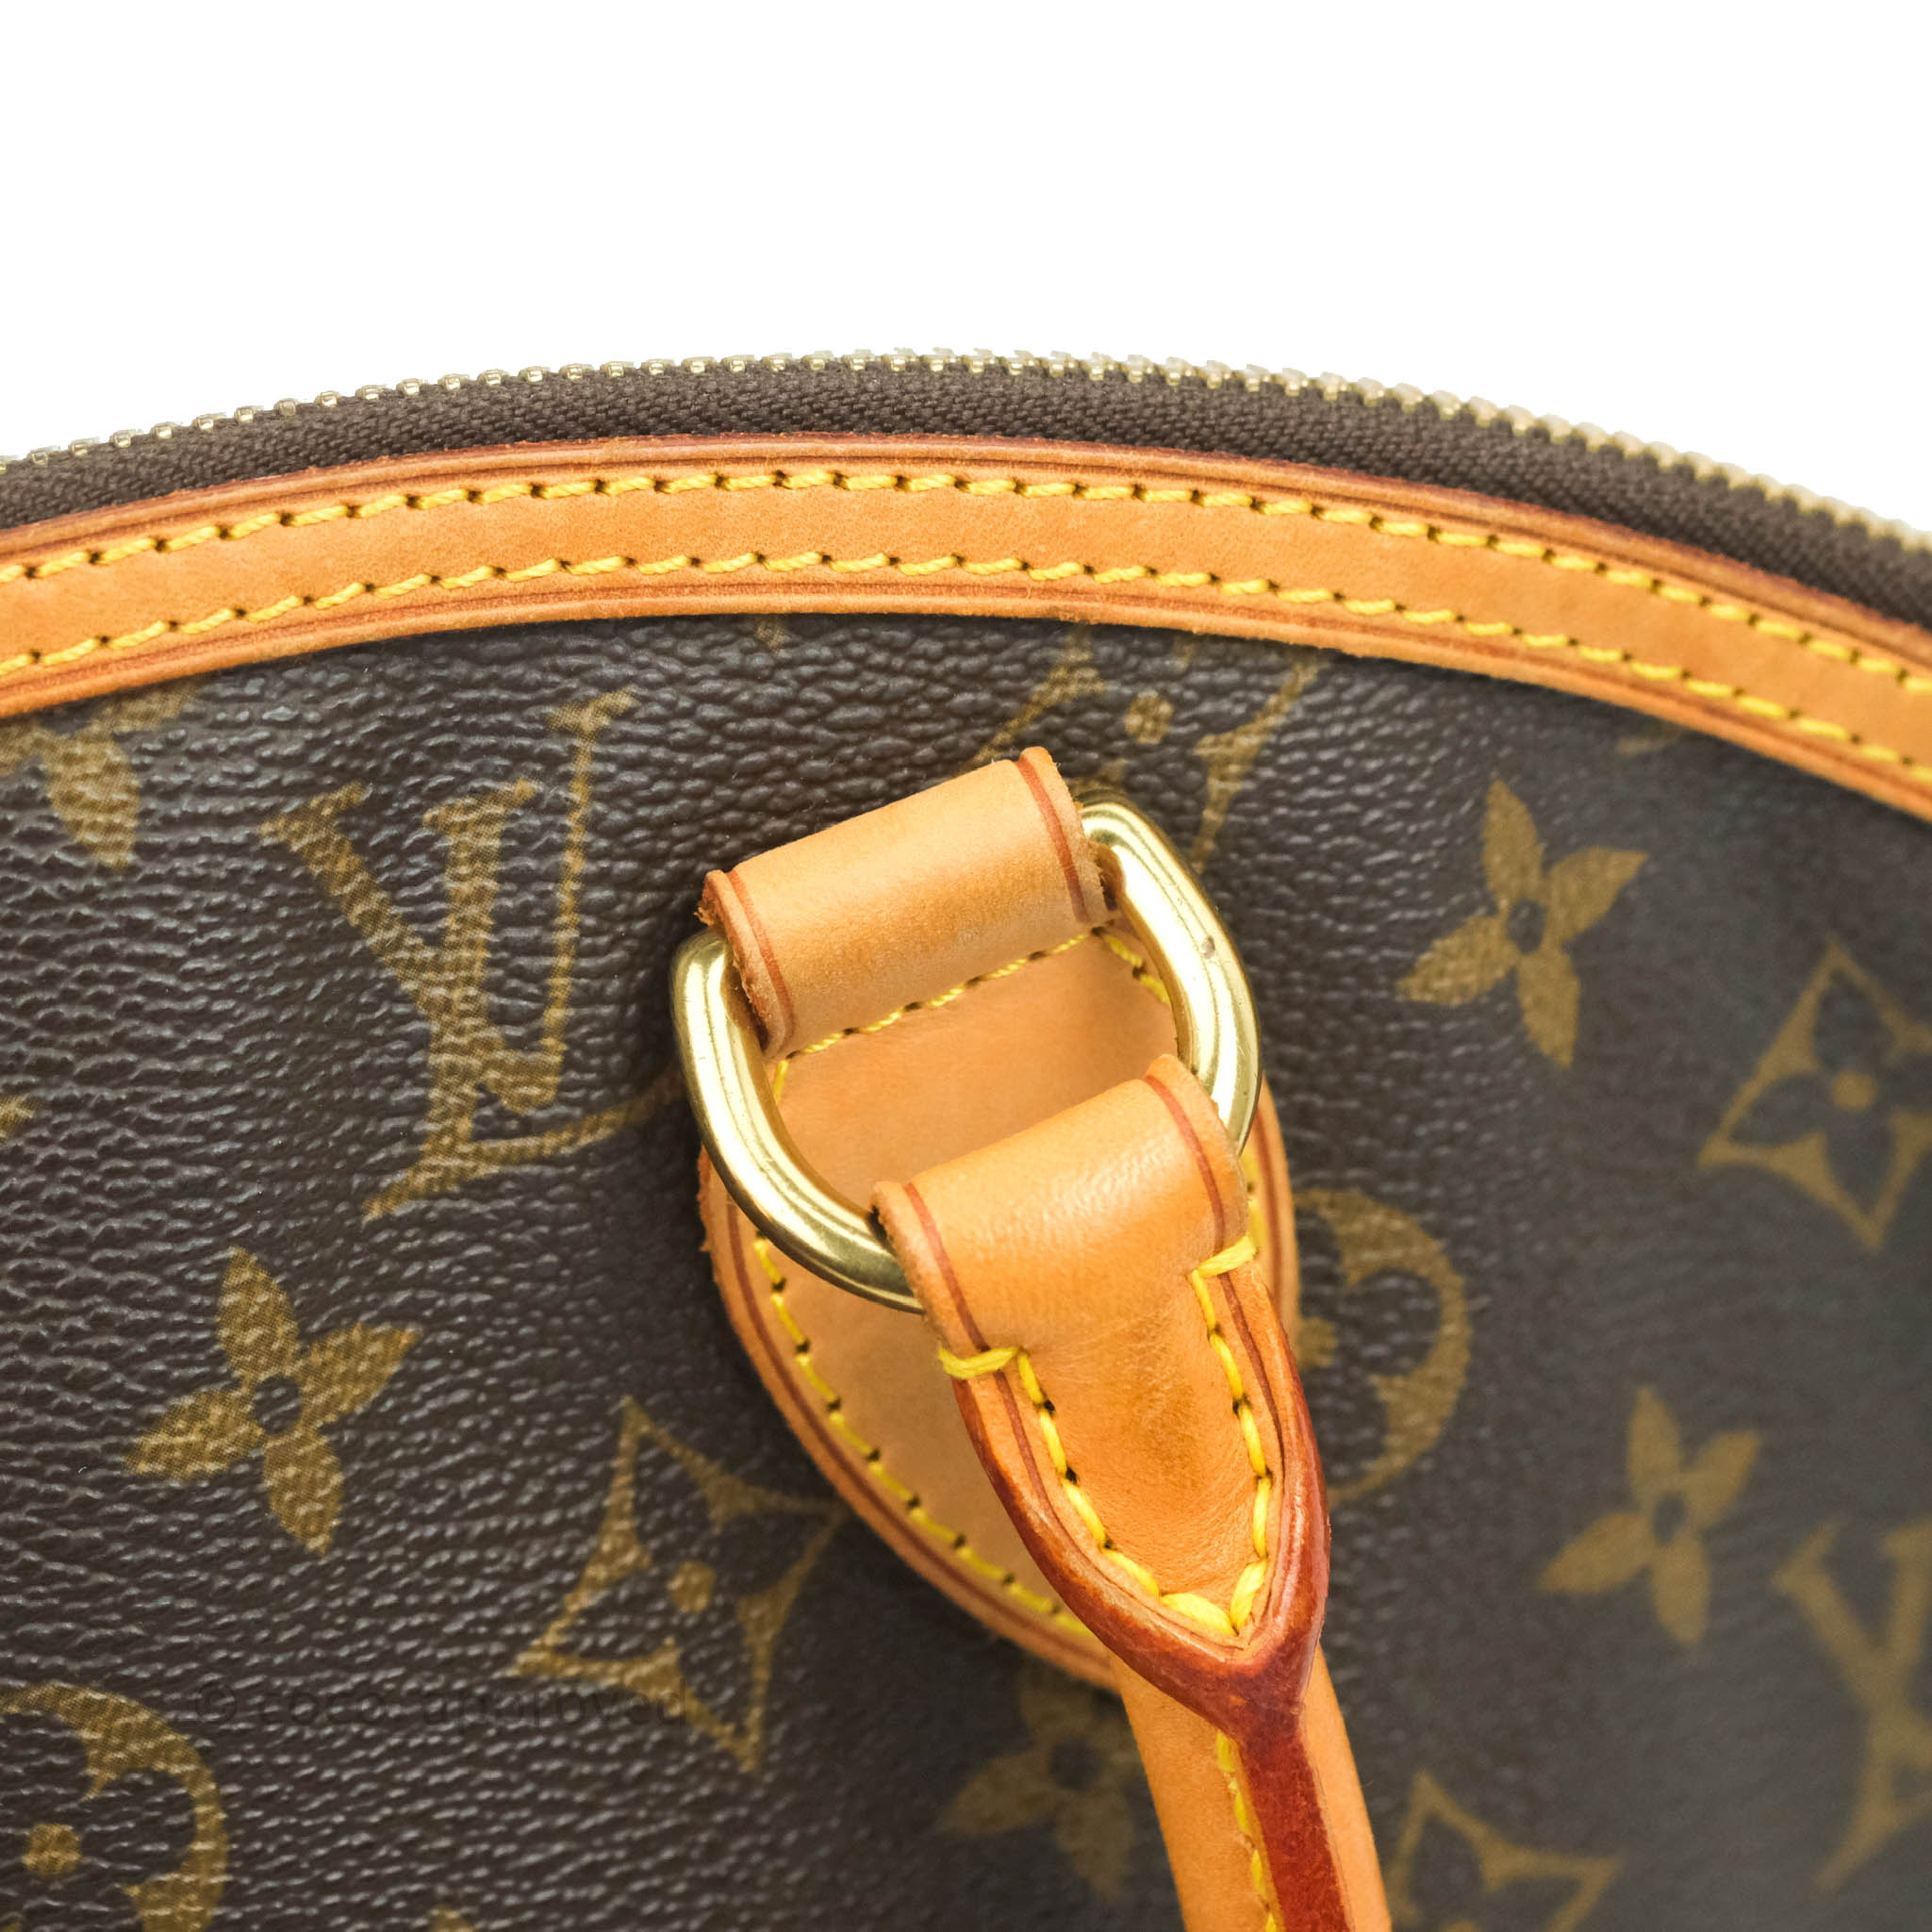 Vintage 2006 Louis Vuitton Lockit PM Monogram Canvas/Leather Handbag  Brown/Tan